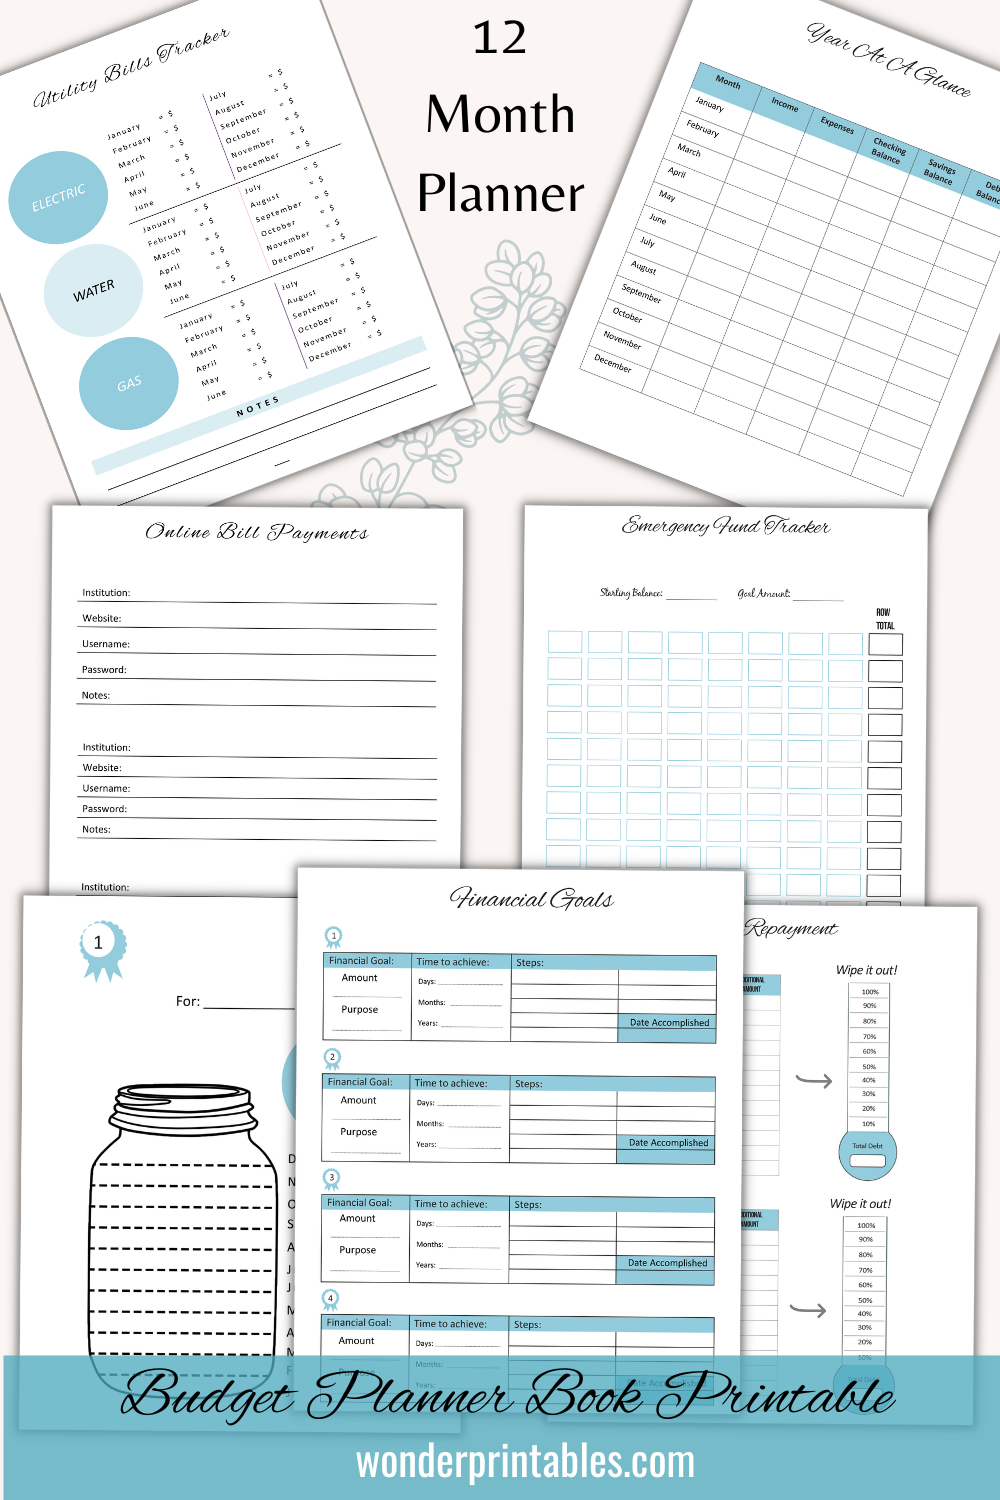 Budget Planner Book - Printable